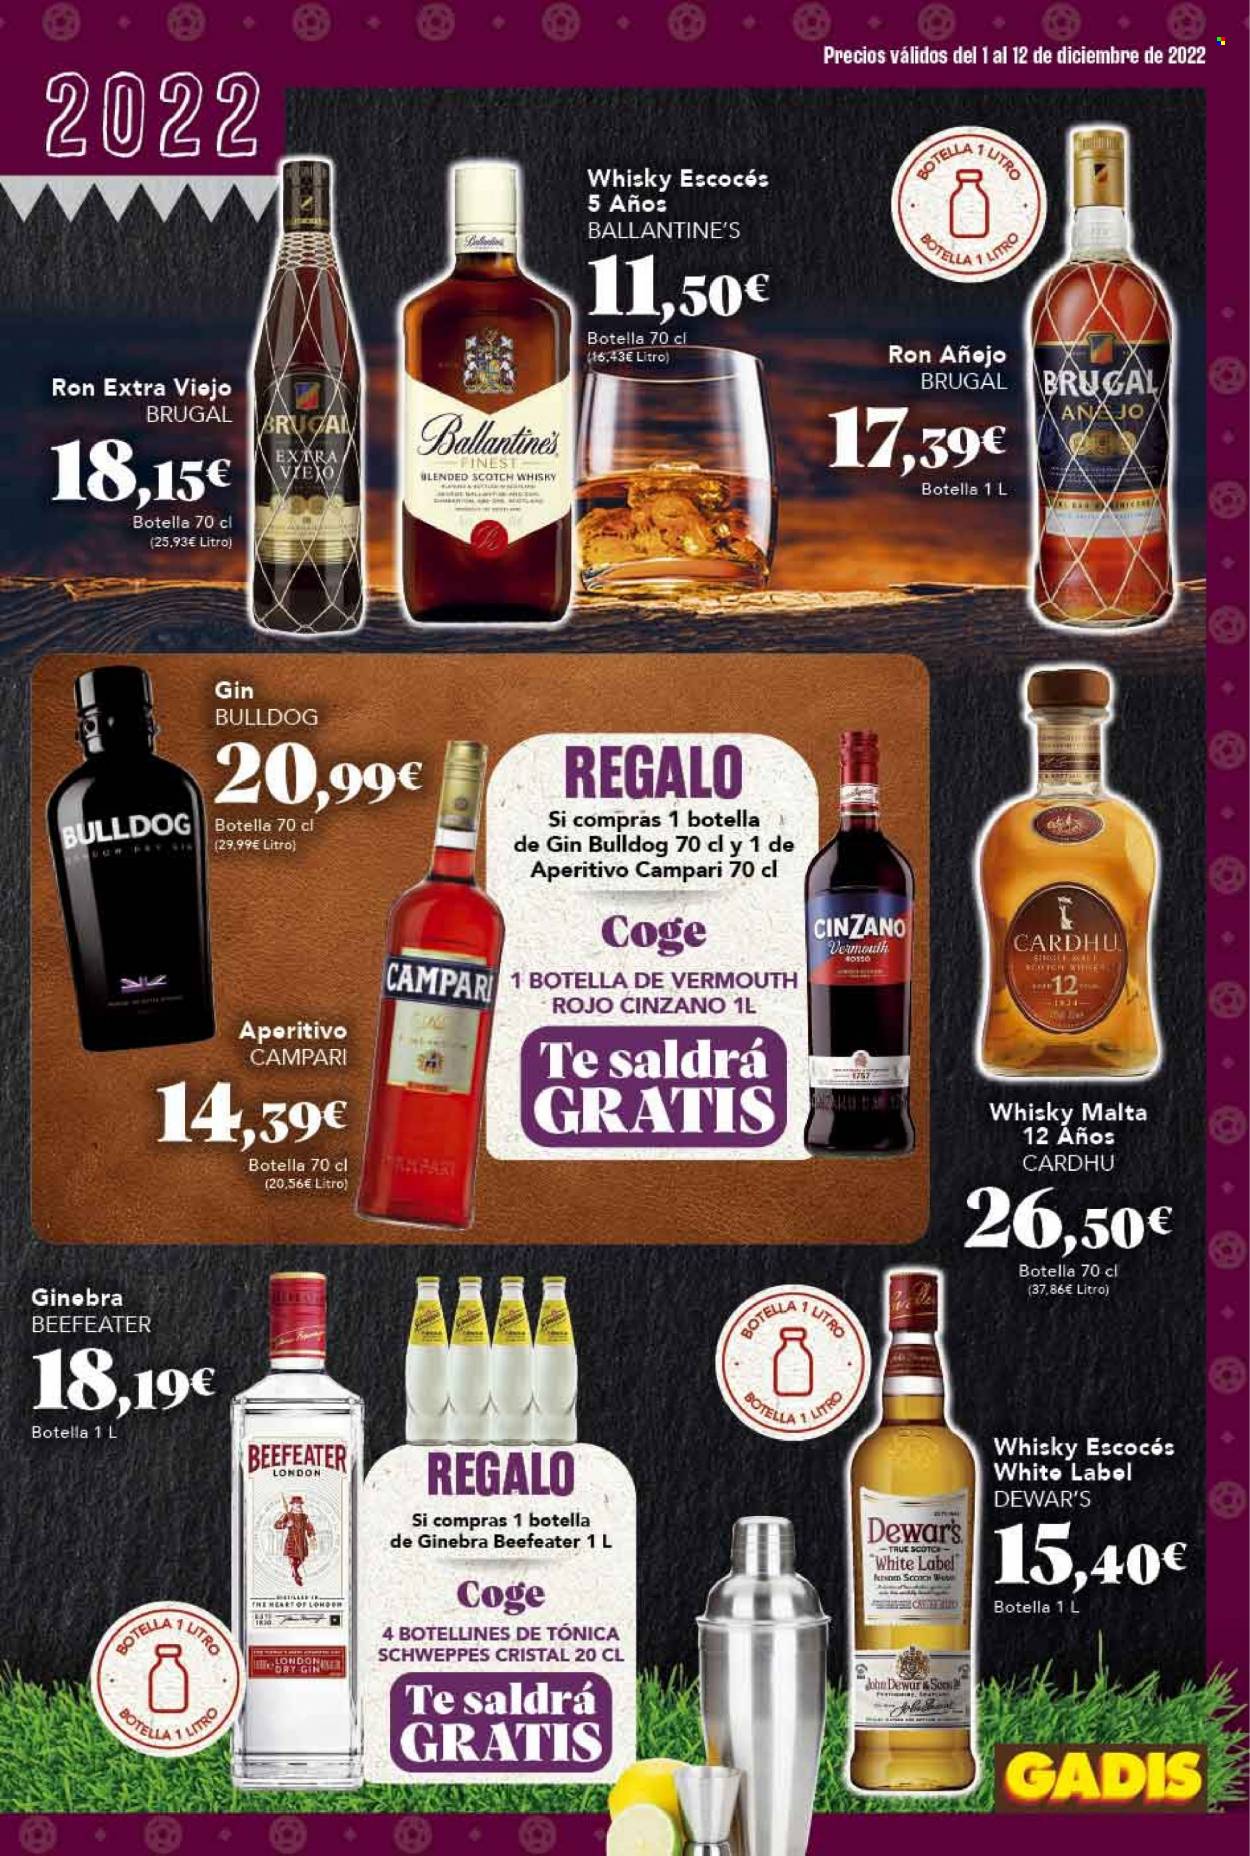 thumbnail - Folleto actual Gadis - 01/12/22 - 12/12/22 - Ventas - tonica, Schweppes, Cinzano, ron, Ballantine's, Beefeater, Brugal, Bulldog, gin, vermouth, whisky, Scotch Whisky, Campari, Dewar's, ron añejo. Página 9.